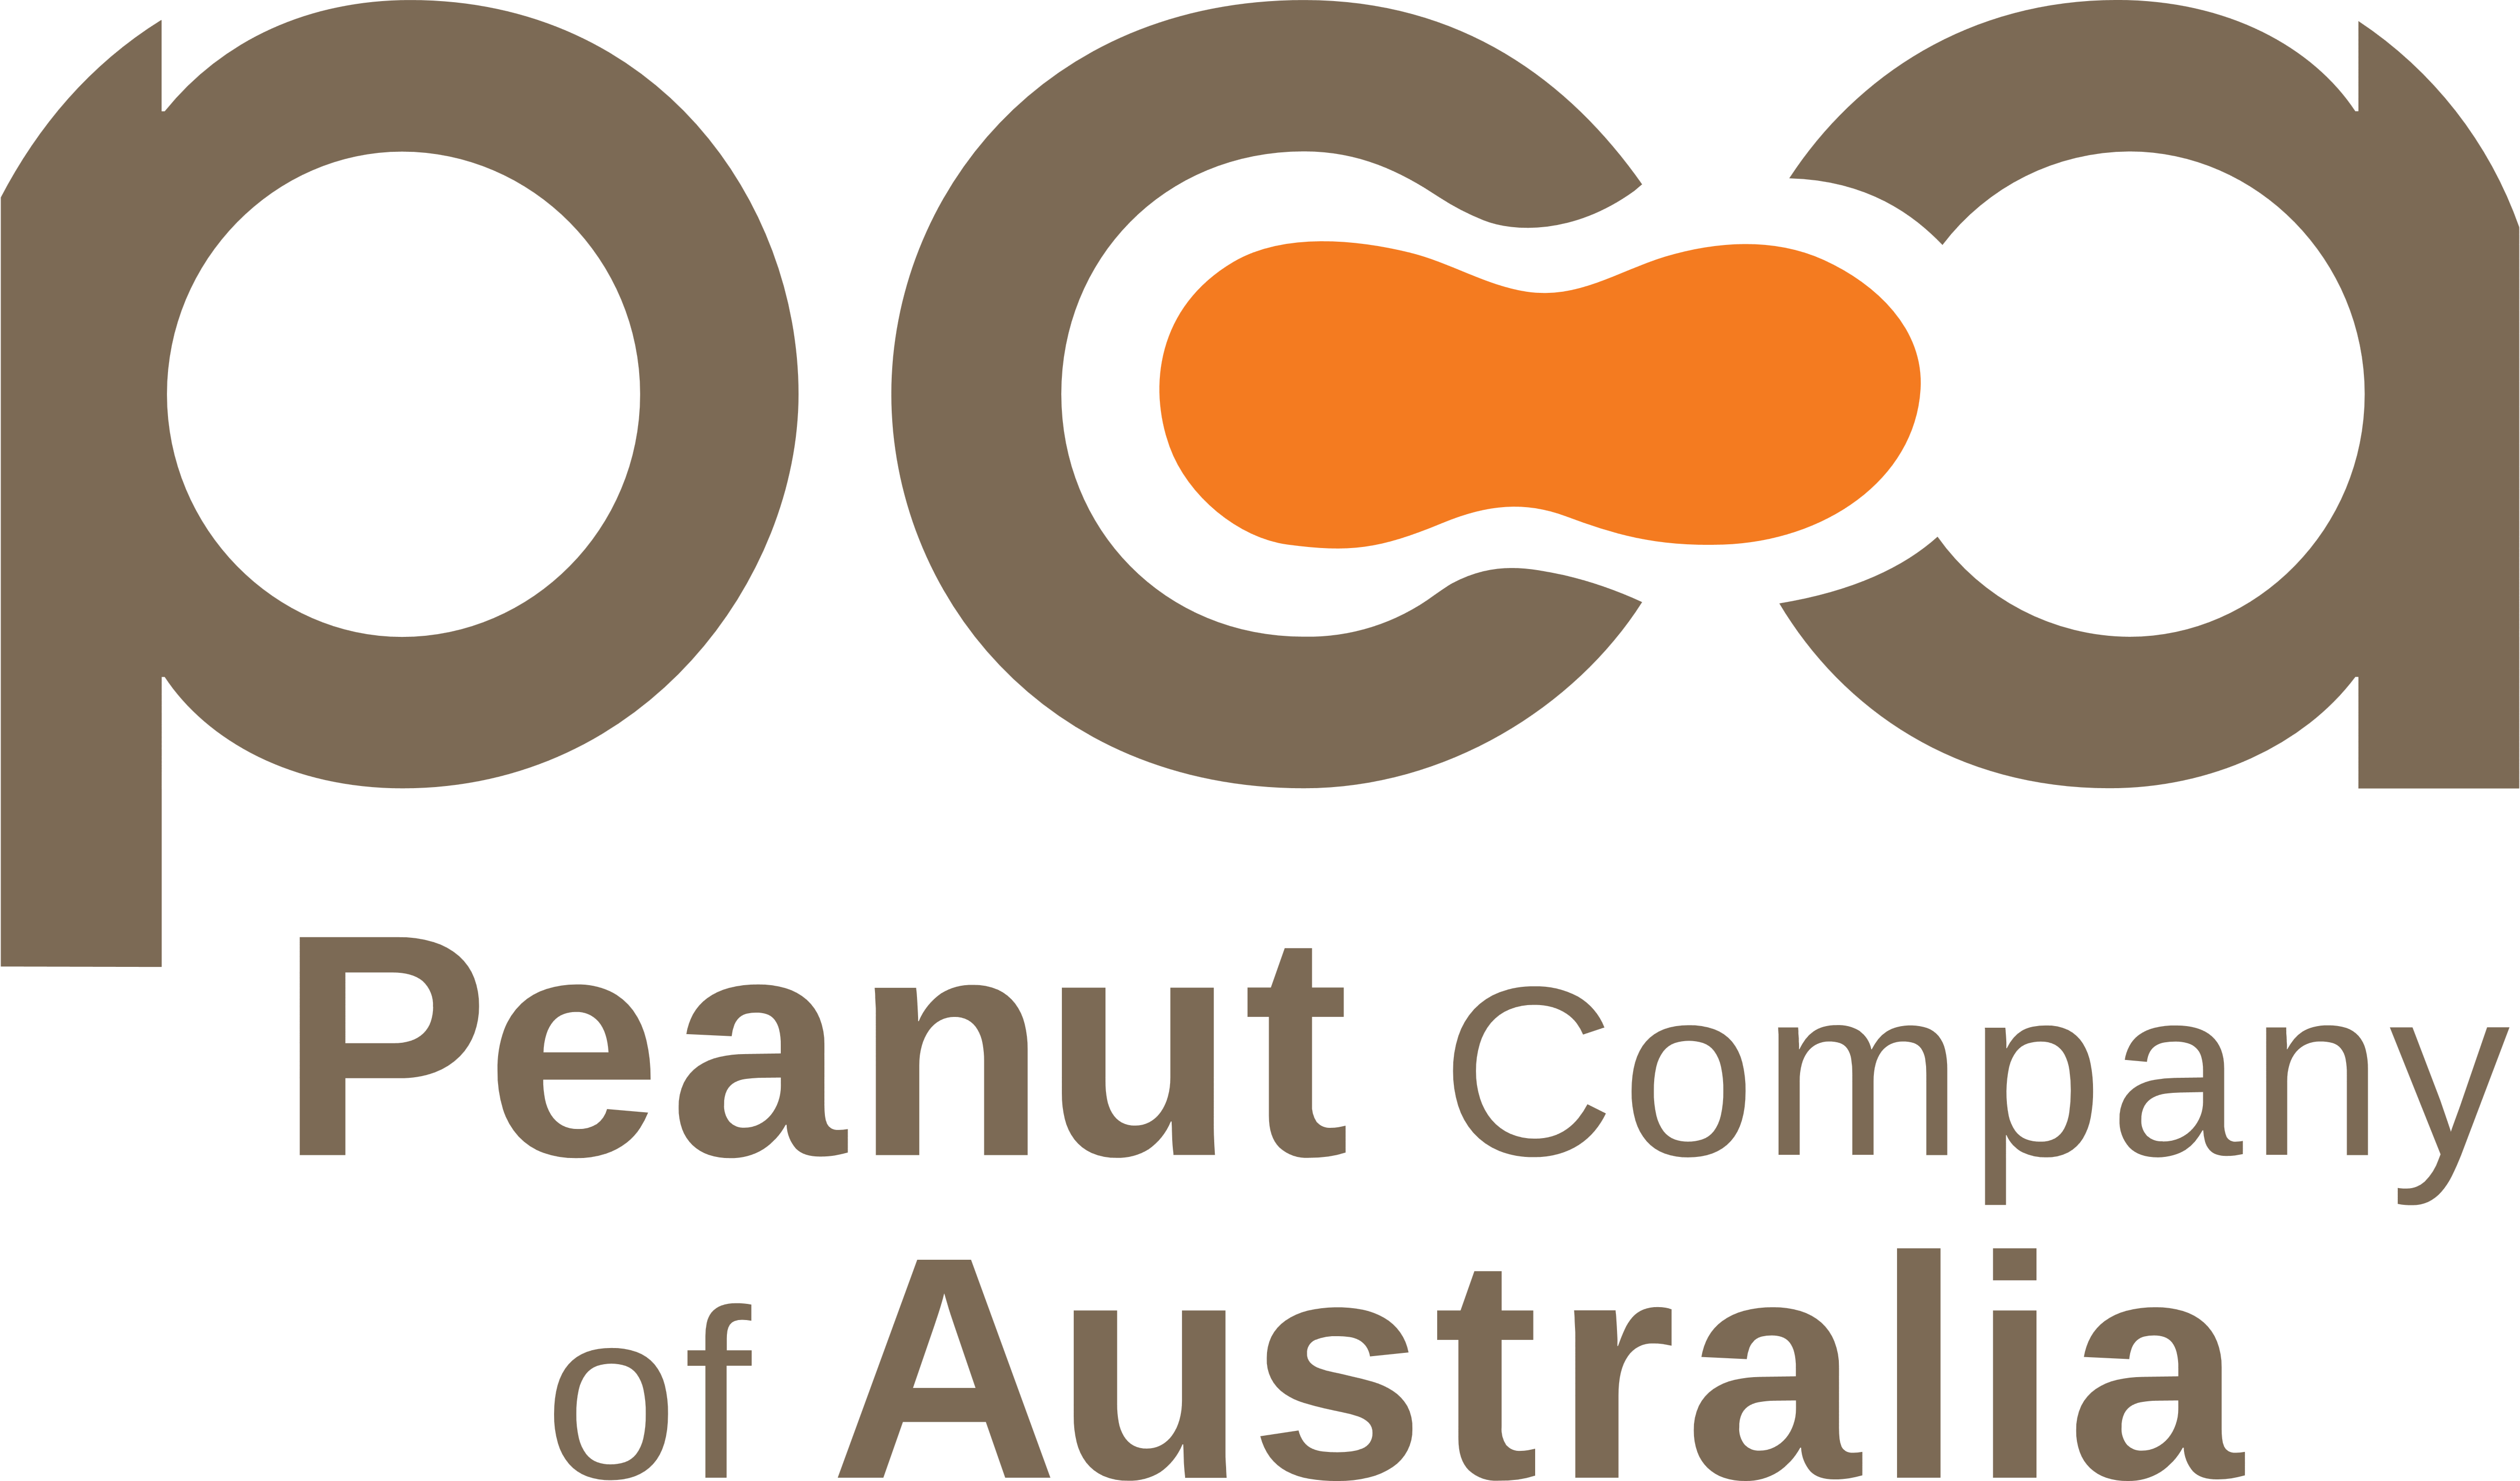 Со company. Australian фирма. Компании Австралии. Treets logo the Peanut Company. Happy Peanut logo.